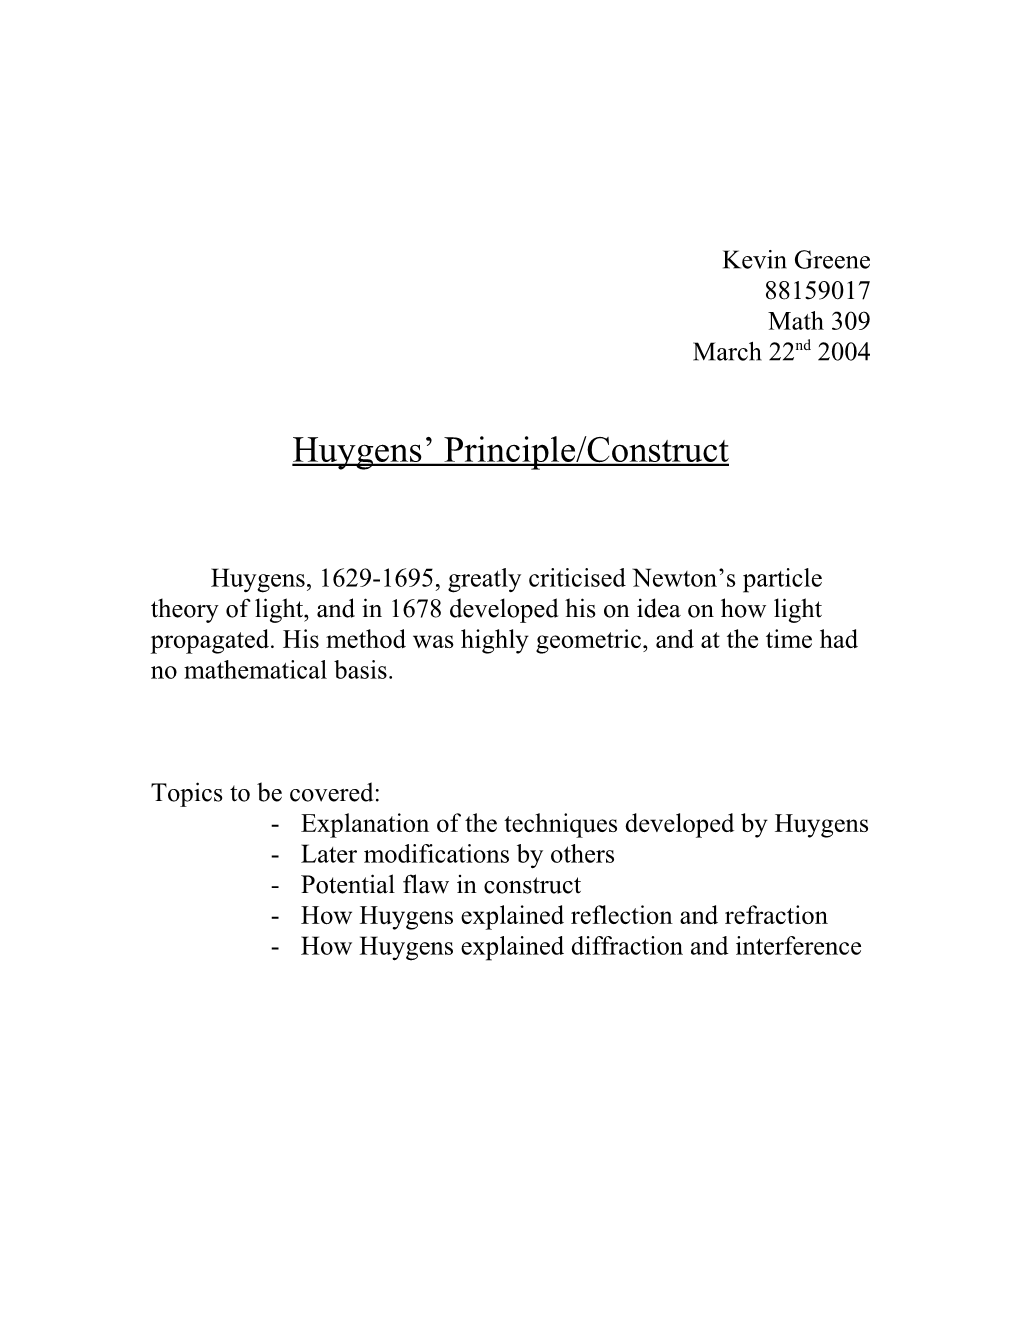 Huygens Principle/Construct